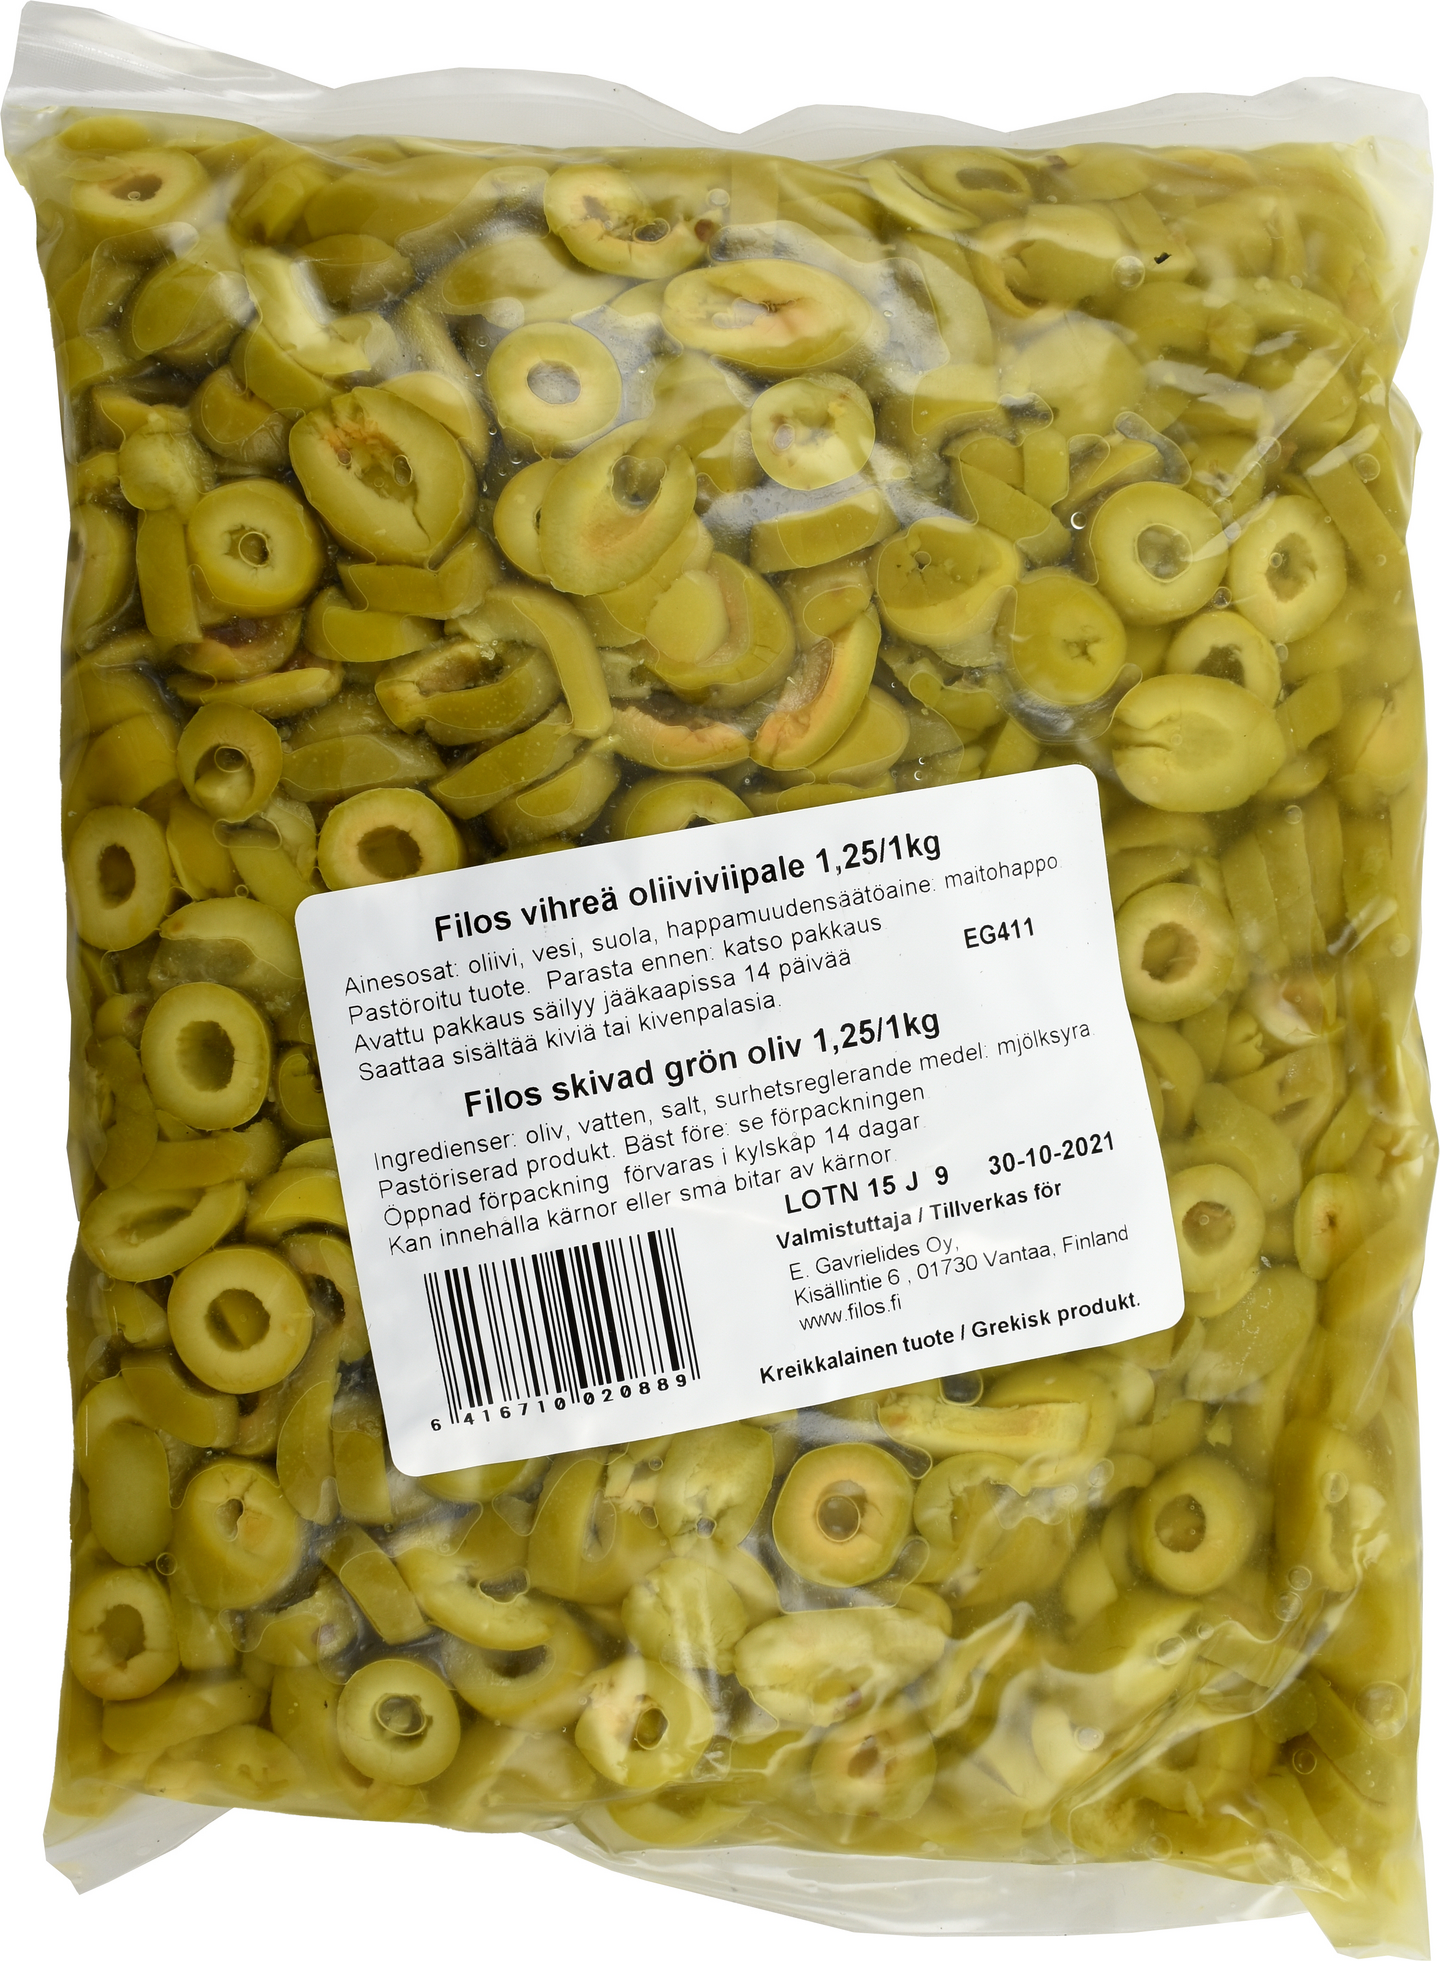 Filos vihreä oliiviviipale 1,25/1kg pussi